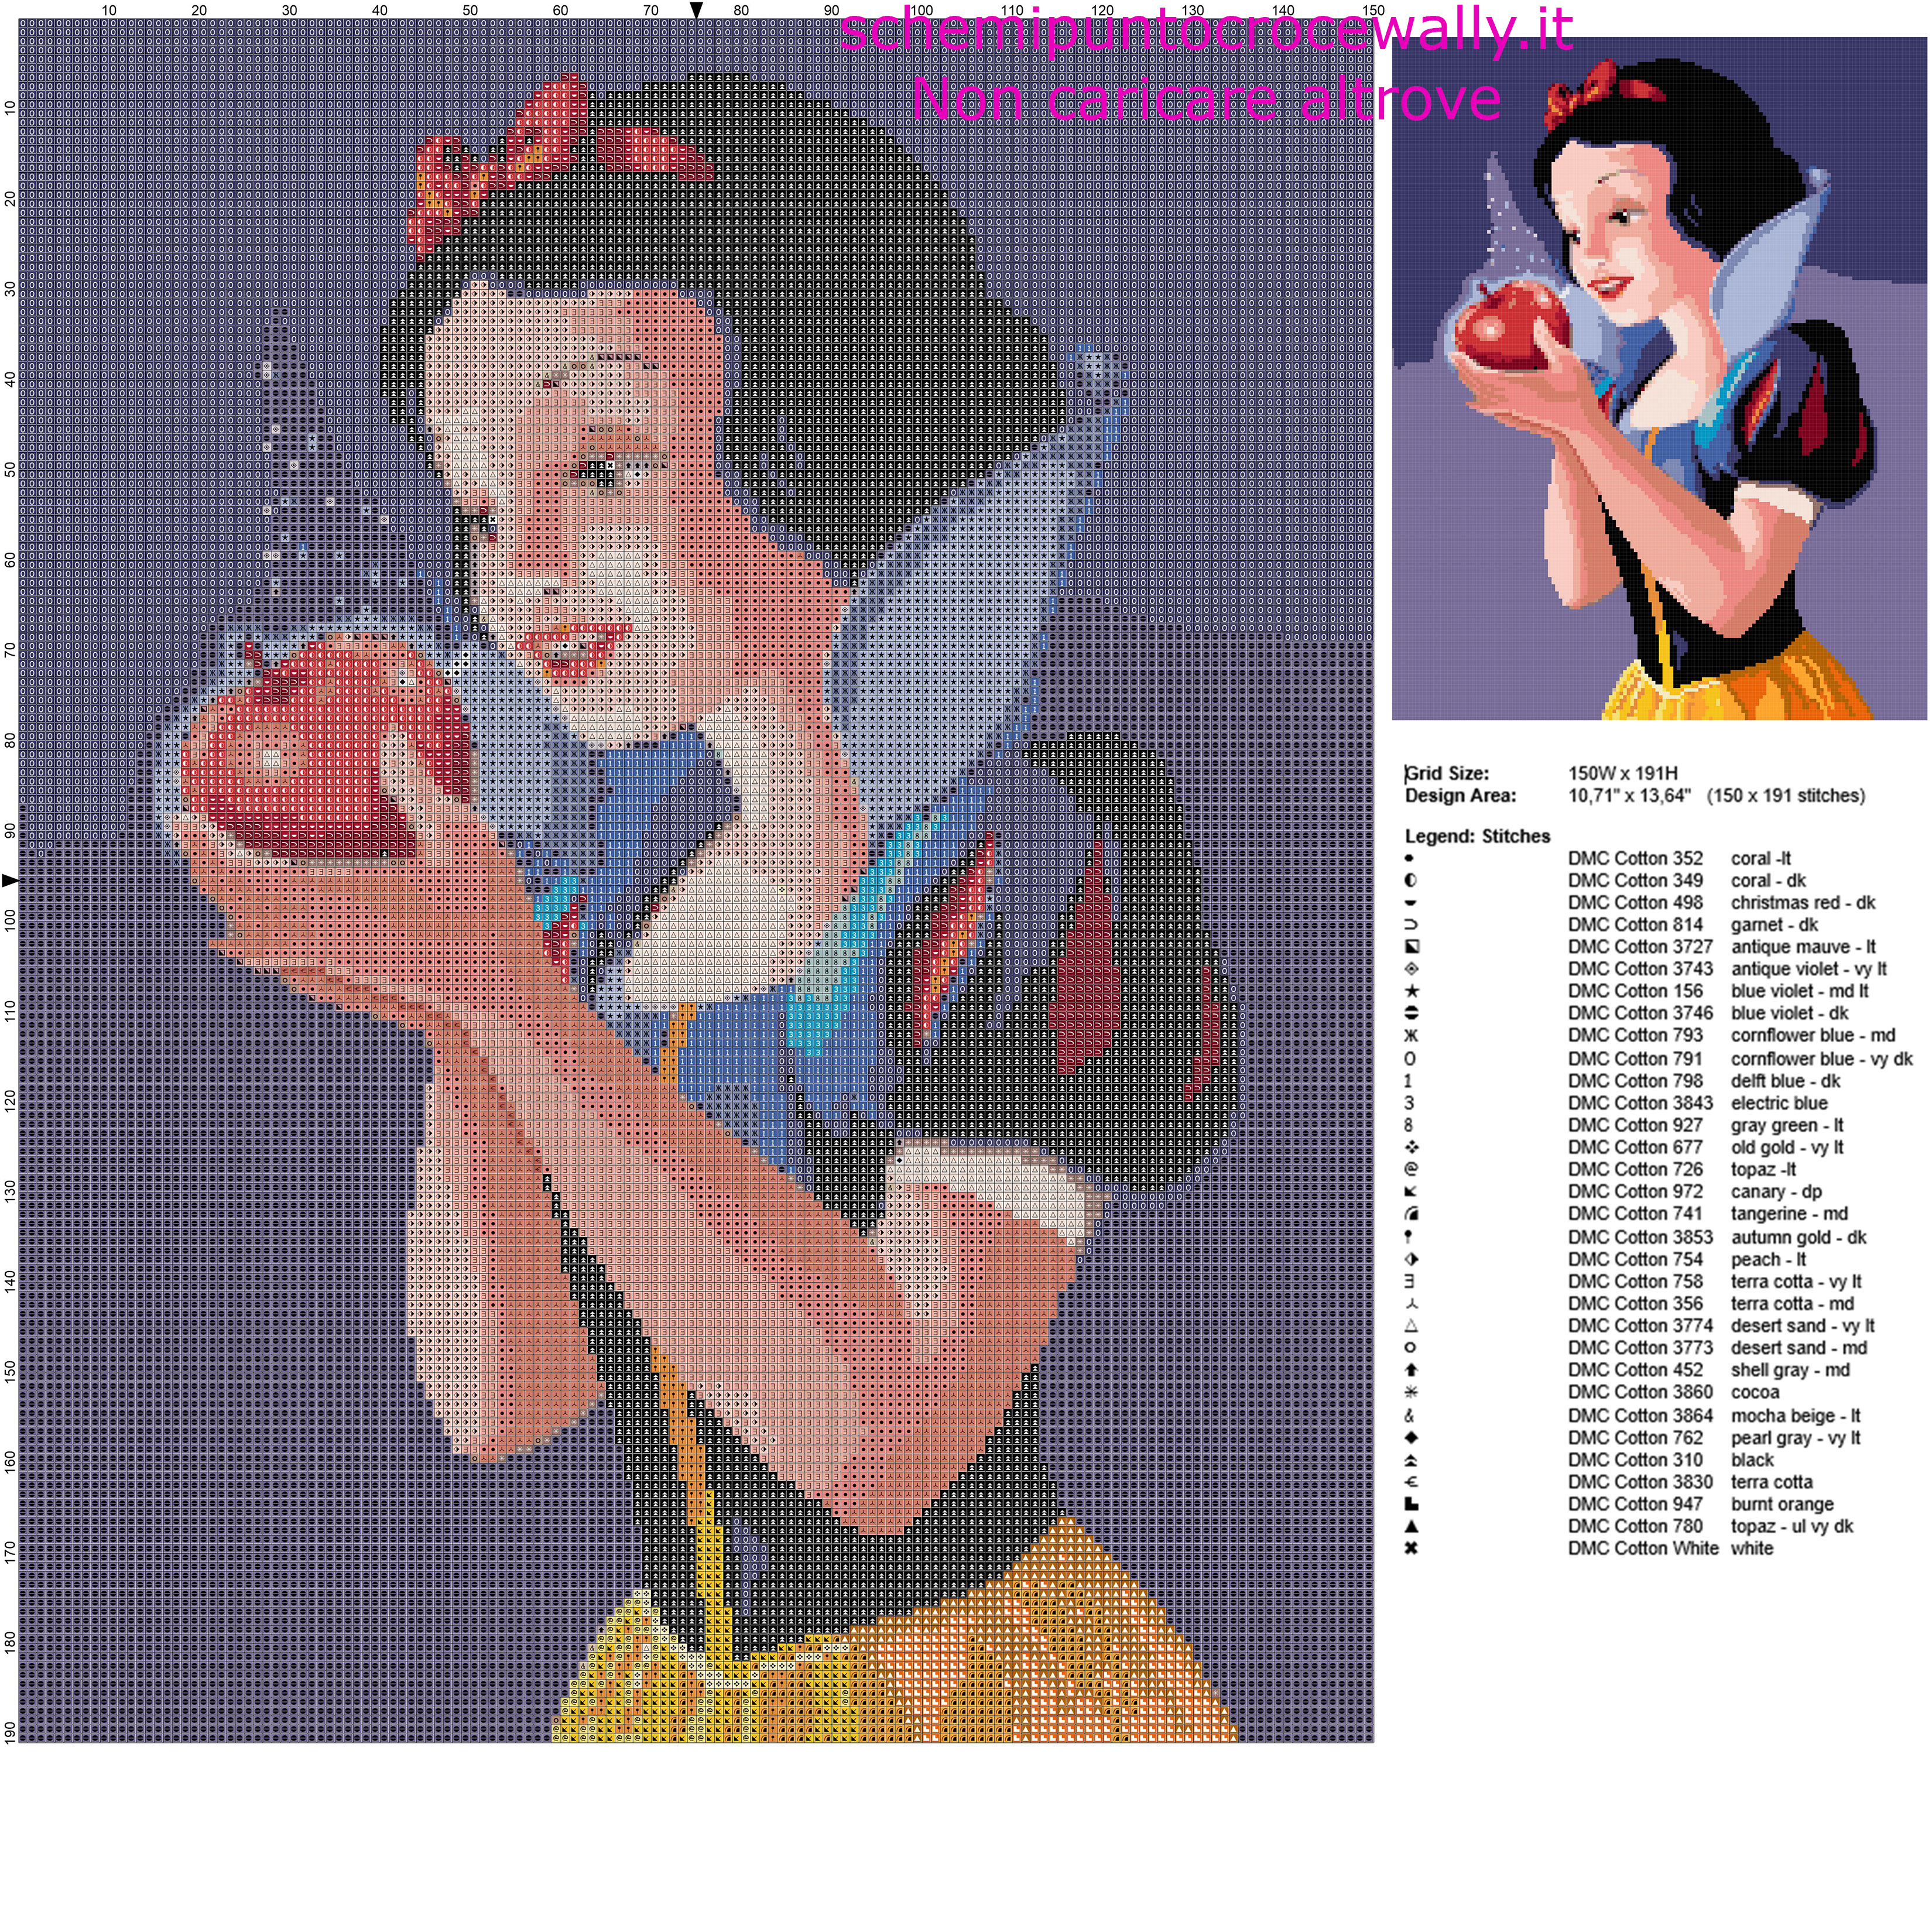 Bellissima Principessa Disney Biancaneve con la mela rossa schema punto croce gratis